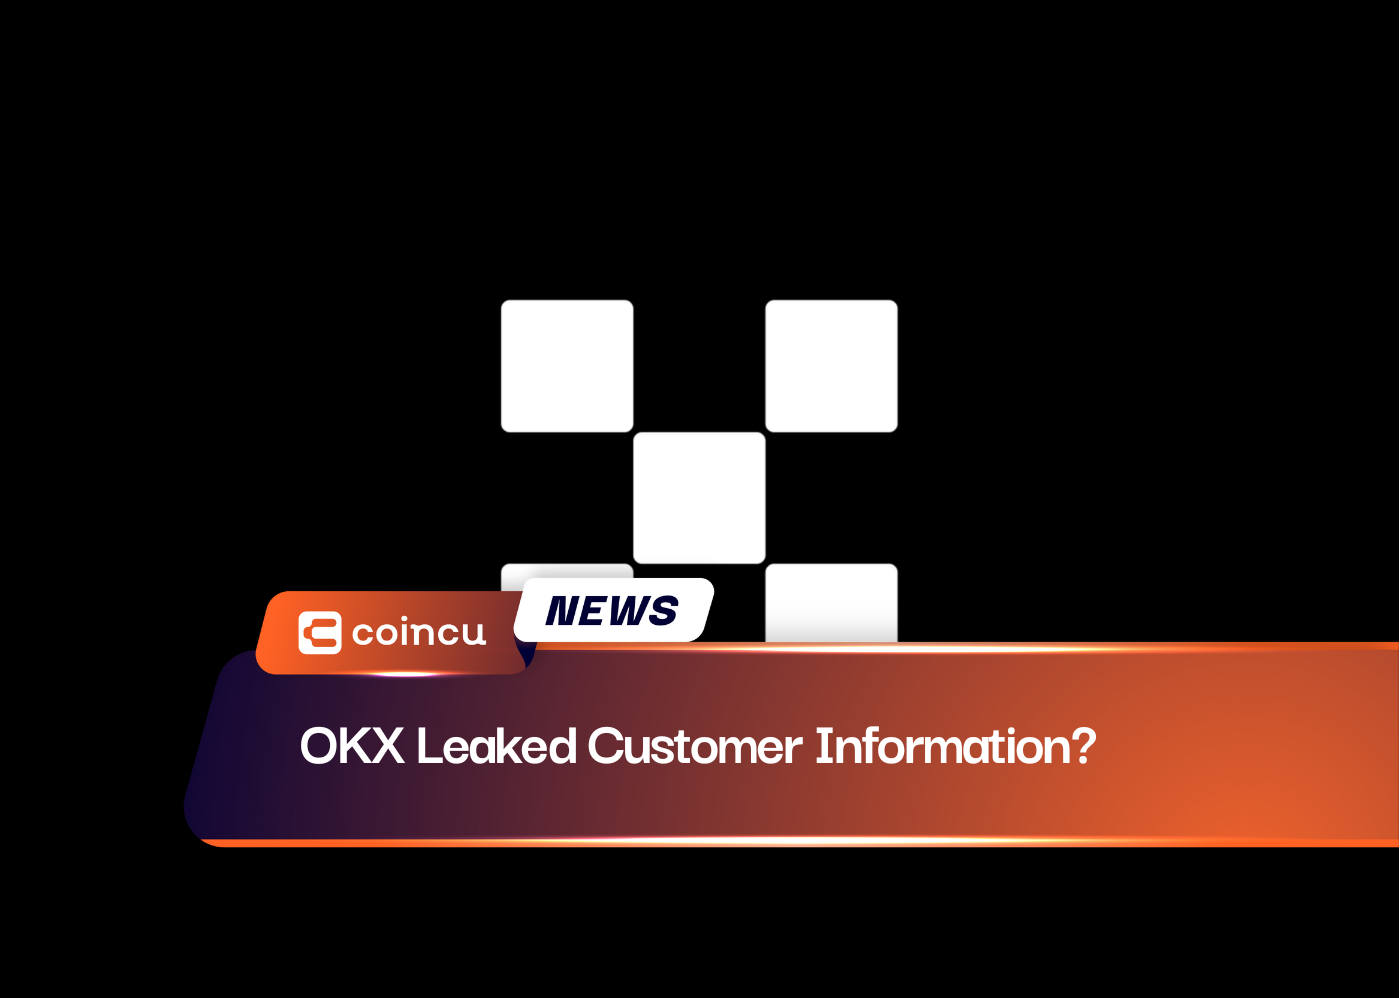 OKX Leaked Customer Information?